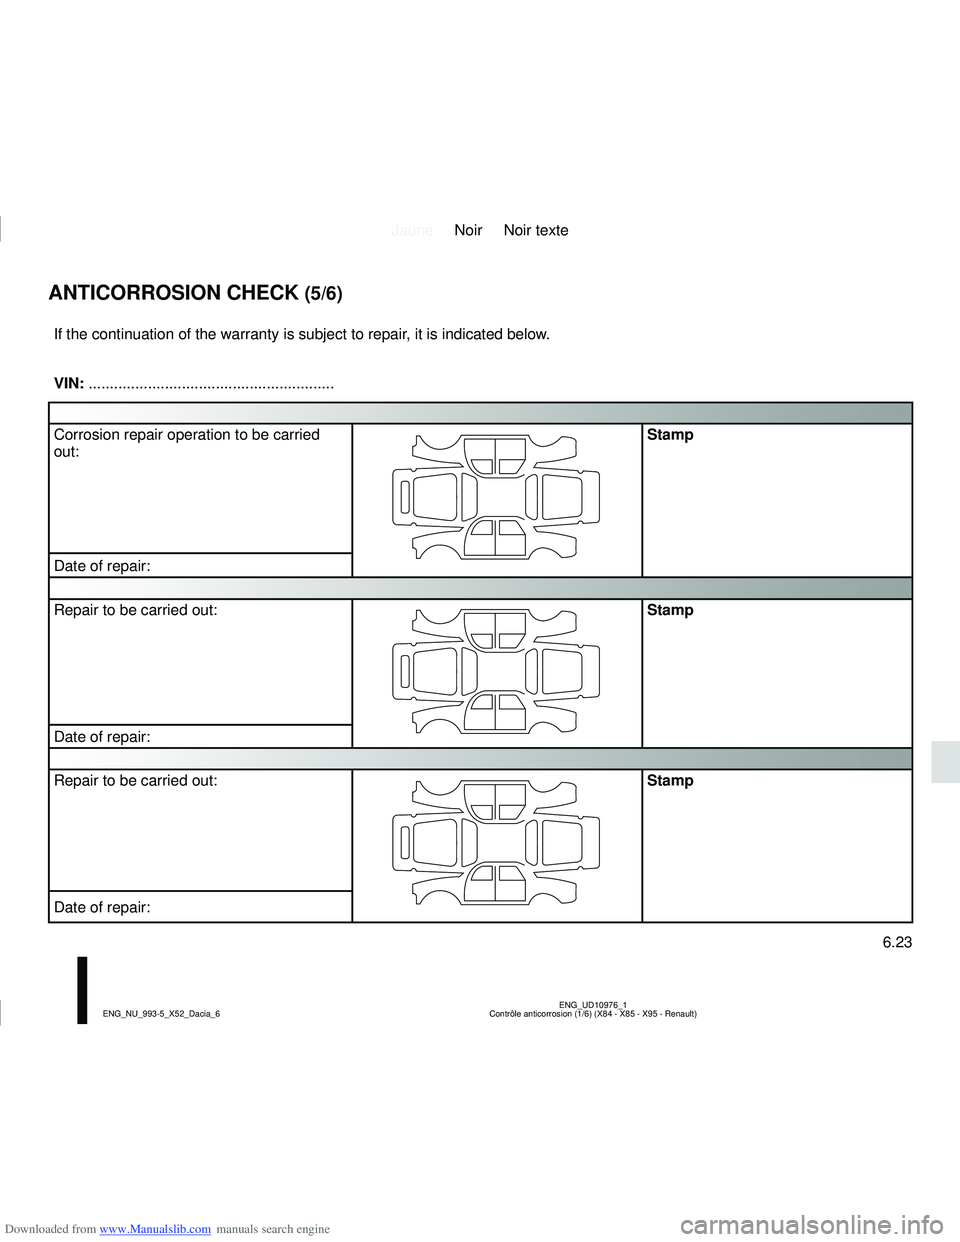 DACIA LOGAN 2021 Manual PDF Downloaded from www.Manualslib.com manuals search engine JauneNoir Noir texte
6.23
ENG_UD10976_1
Contrôle anticorrosion (1/6) (X84 - X85 - X95 - Renault)
ENG_NU_993-5_X52_Dacia_6
ANTICORROSION CHECK 